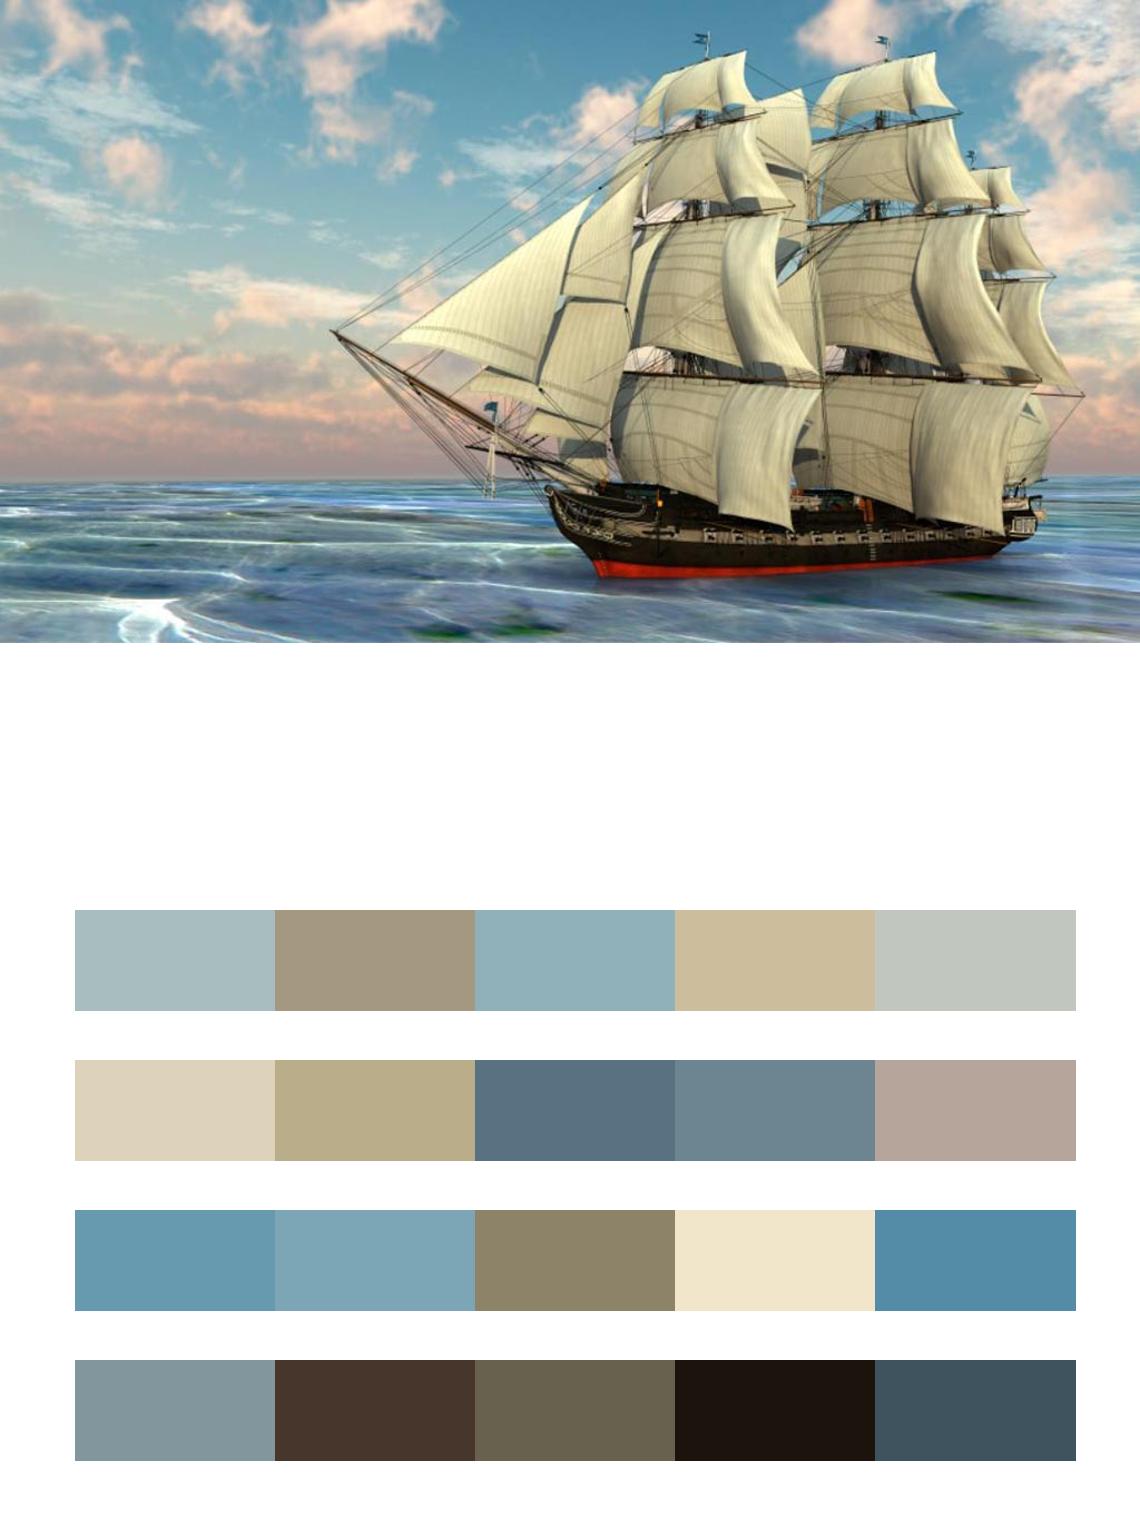 Фрегат парусный корабль цвета